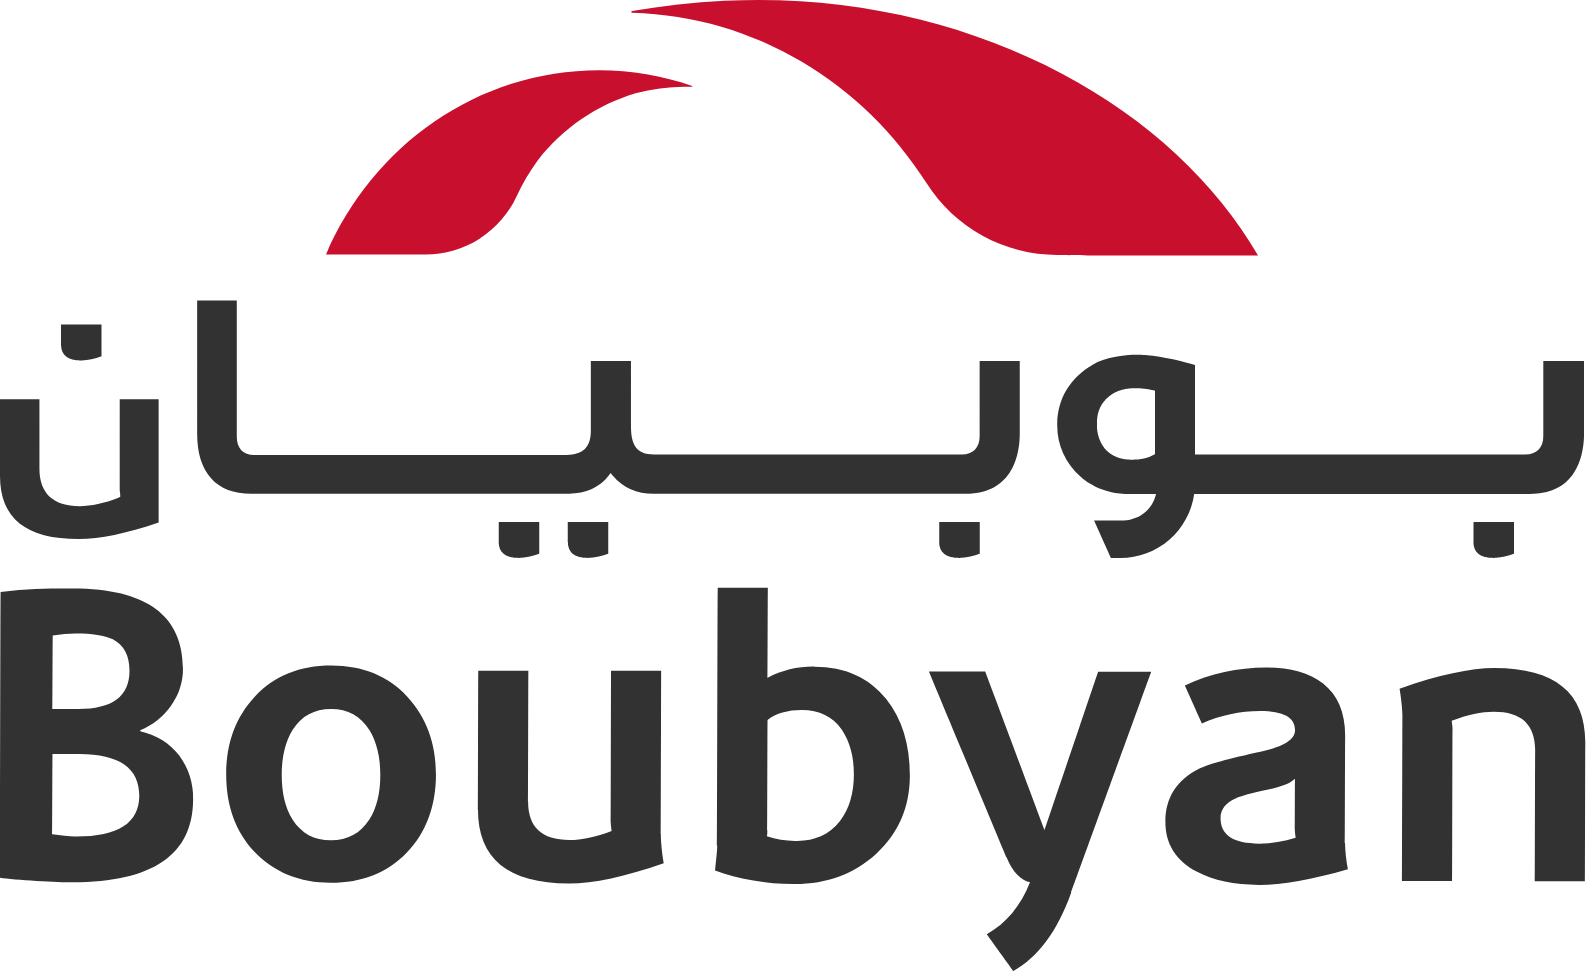 Boubyan Bank logo large (transparent PNG)